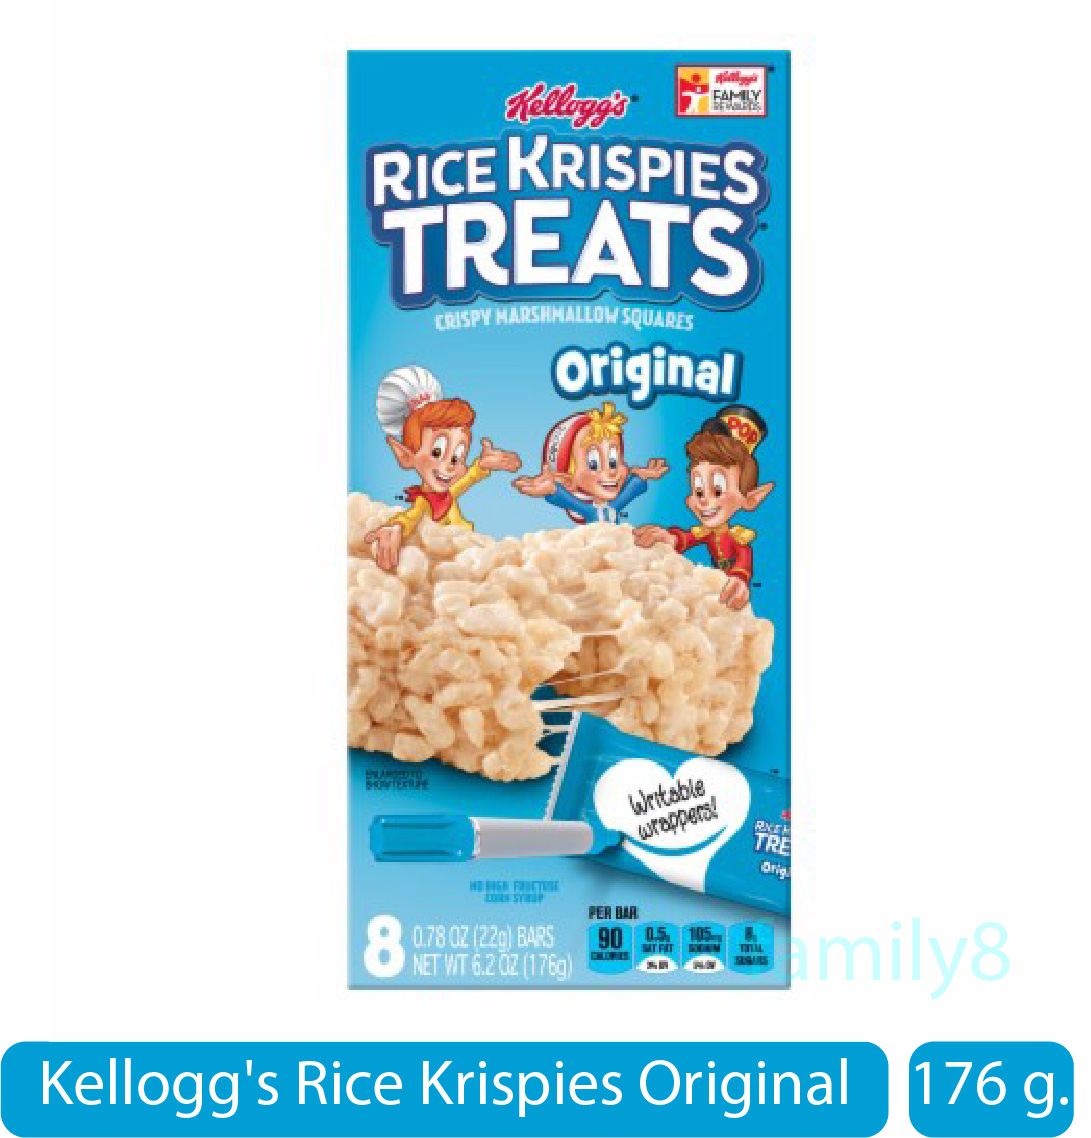 Kellogg's Rice Krispies Original 176 g.?ข้าวพองอบกรอบแบบแท่ง ตรา เคลล็อกซ์?ไรซ์ คริสปี้ ทรีทส์ ออริจินัล สแน็ค บาร์ ?Crispy Marshmallow Squares, Original